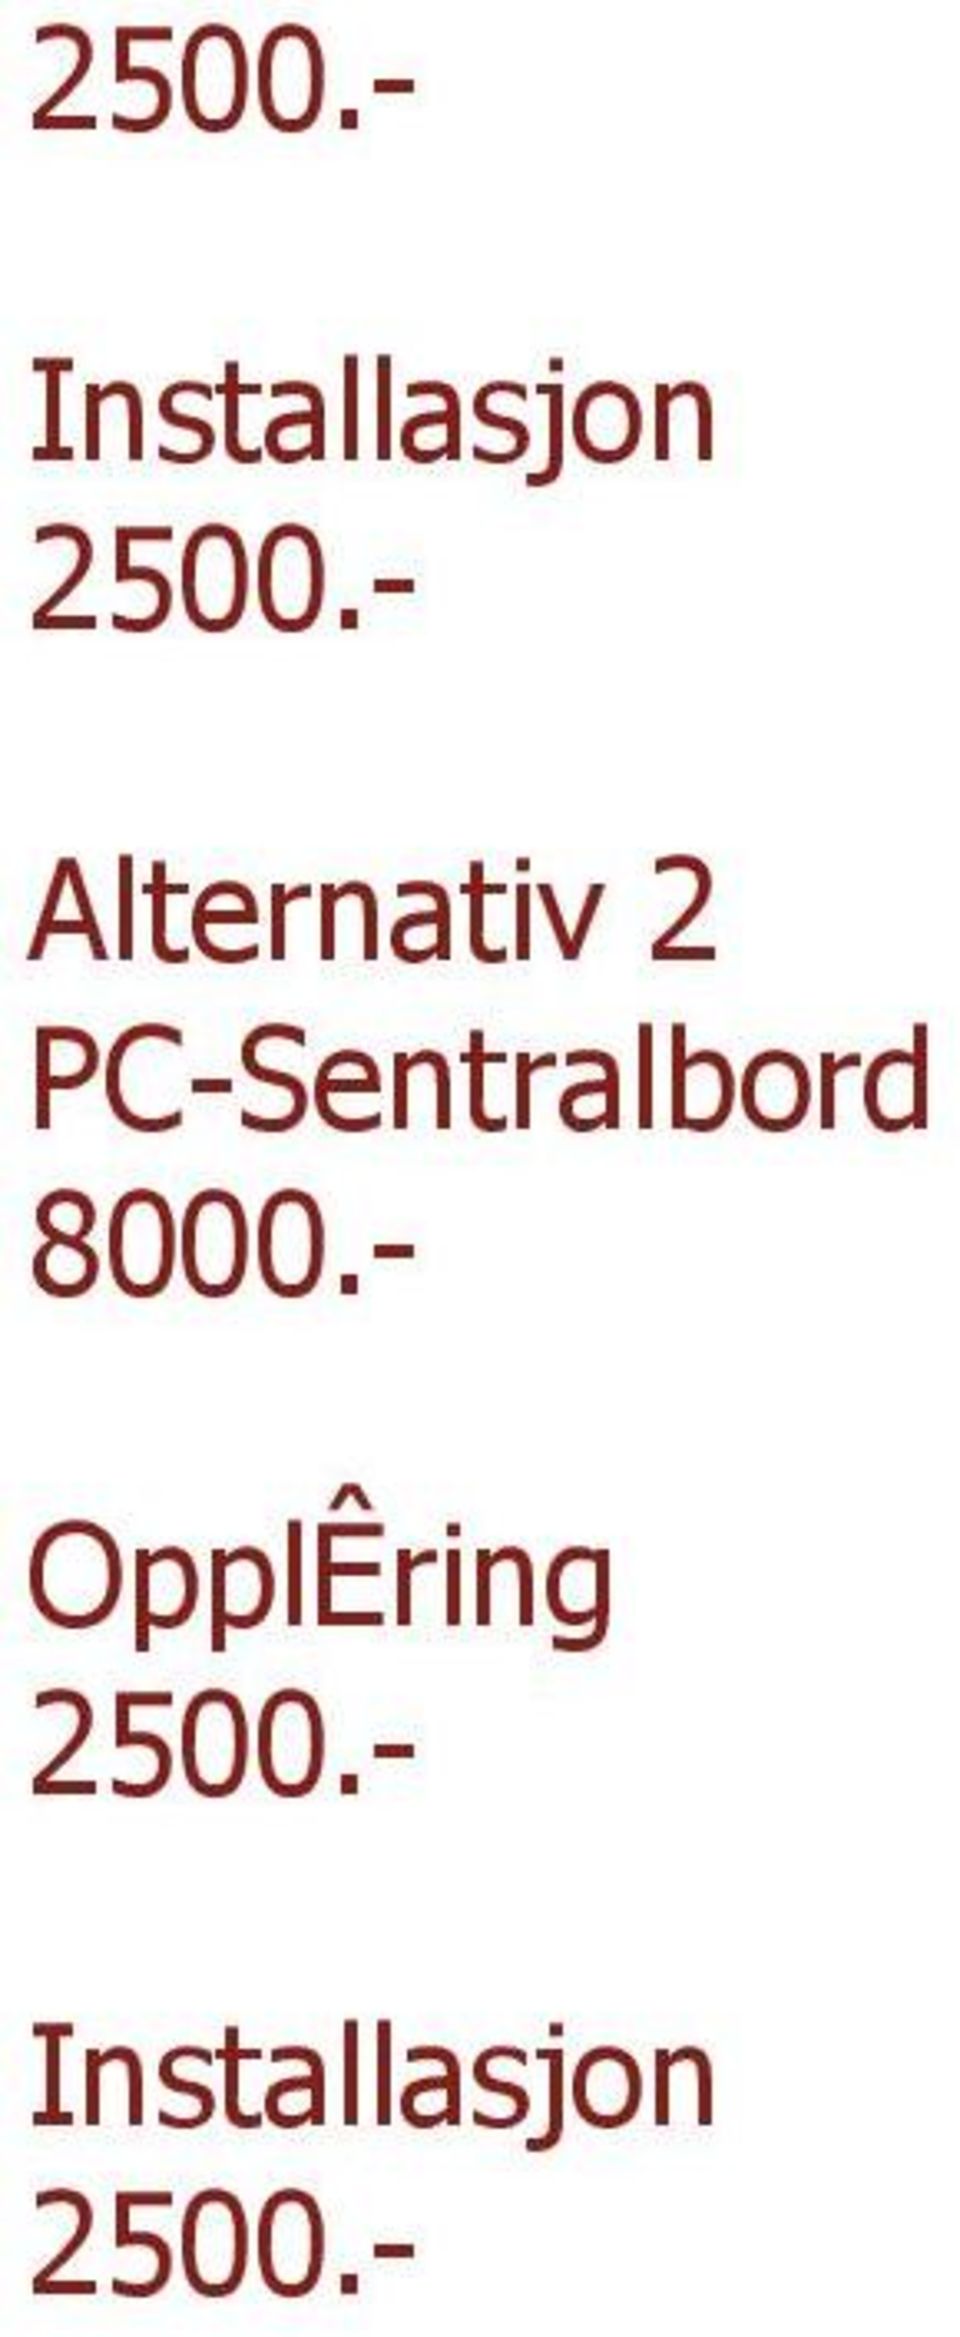 PC-Sentralbord 8000.